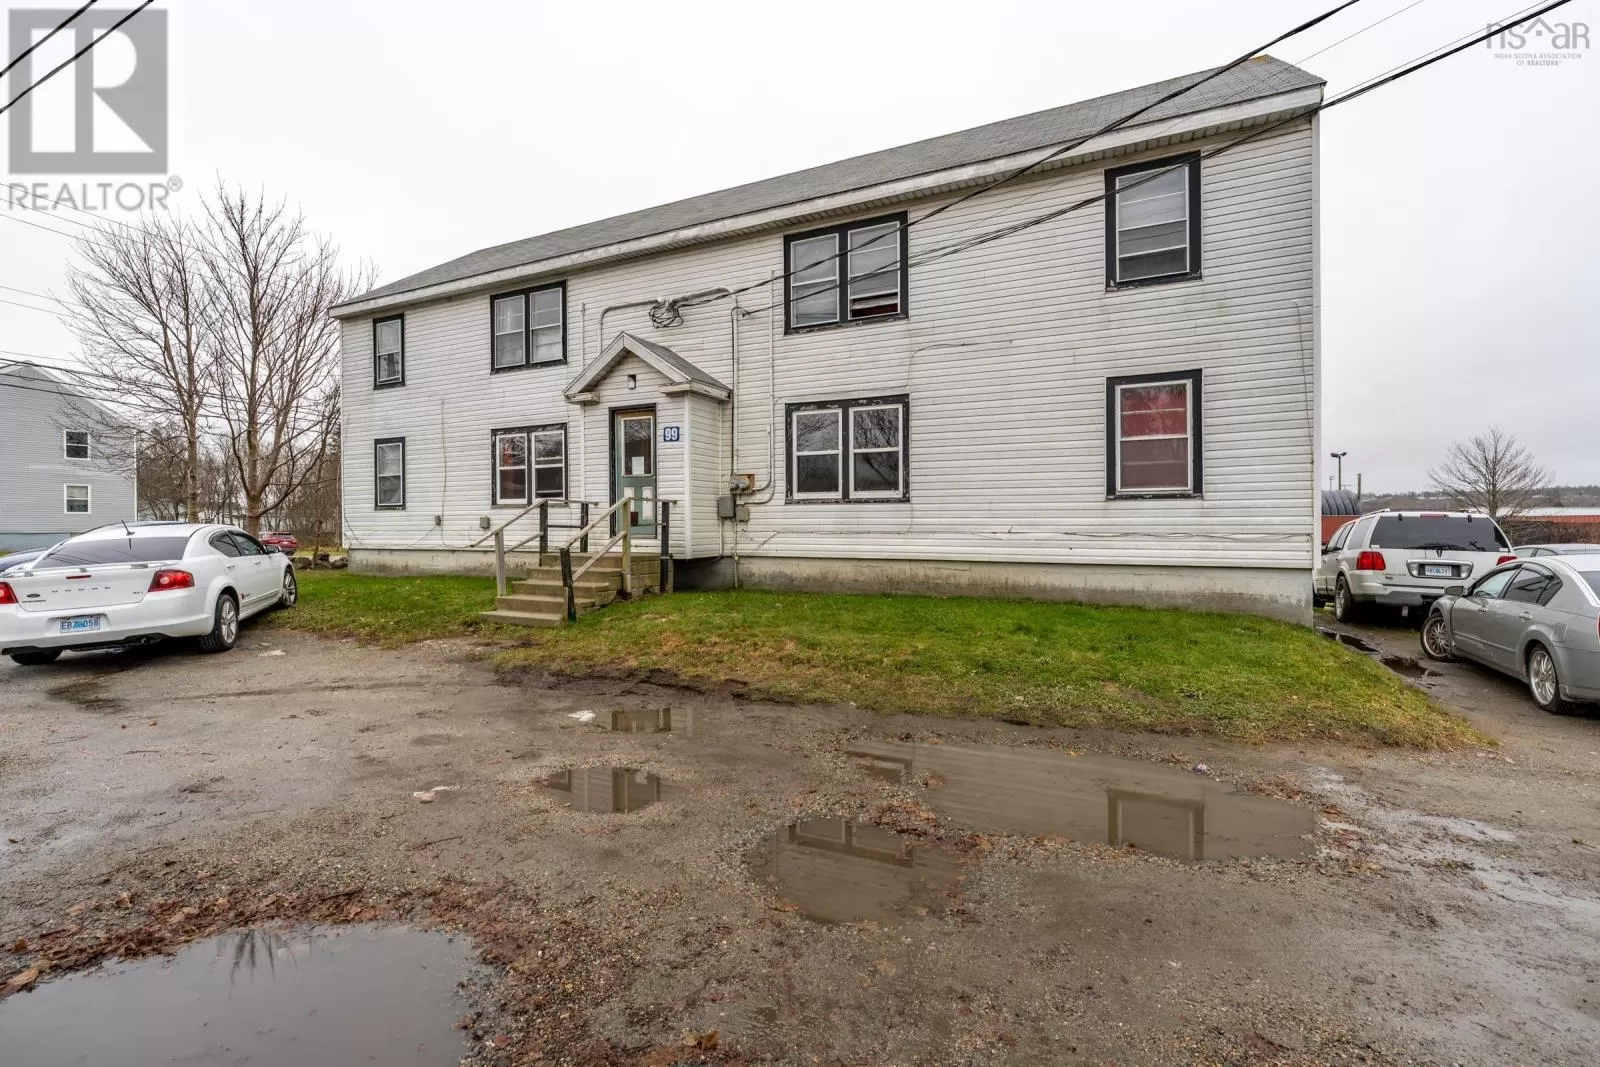 Fourplex for rent: 99 Pleasant Street, Yarmouth, Nova Scotia B5A 2J3